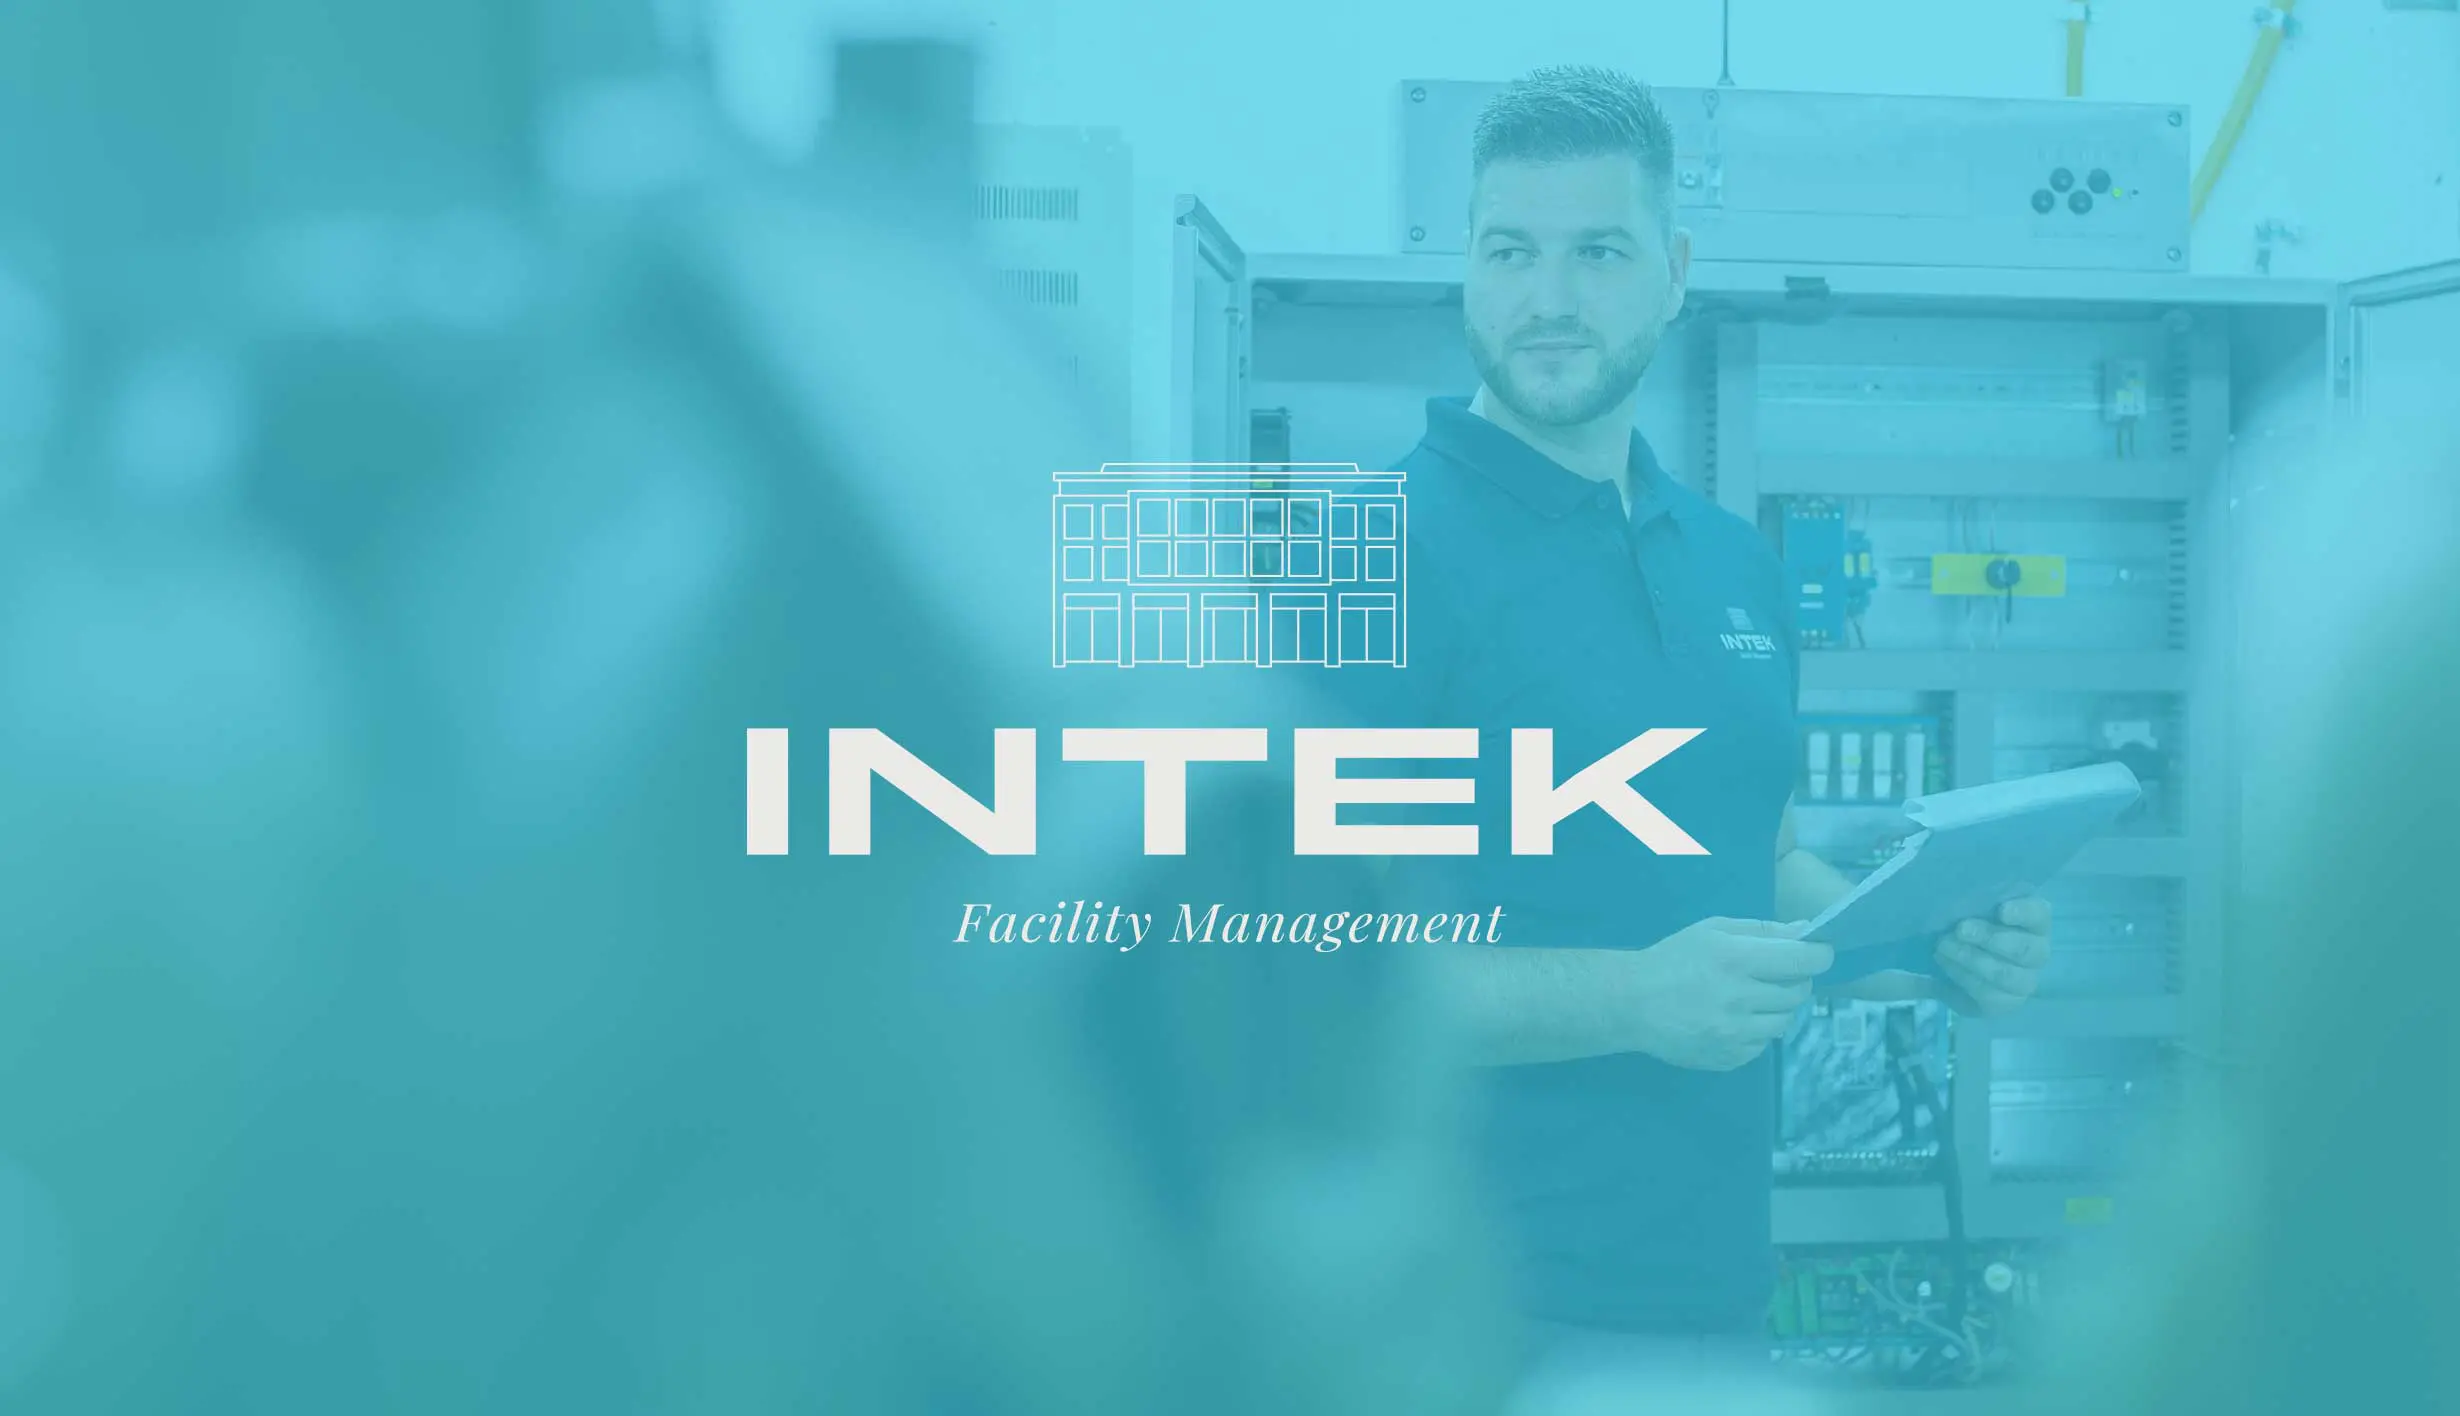 INTEK Facility Management, Corporate Design Agentur, Designagentur Frankfurt, Grafikdesign, Branding, Brand Design